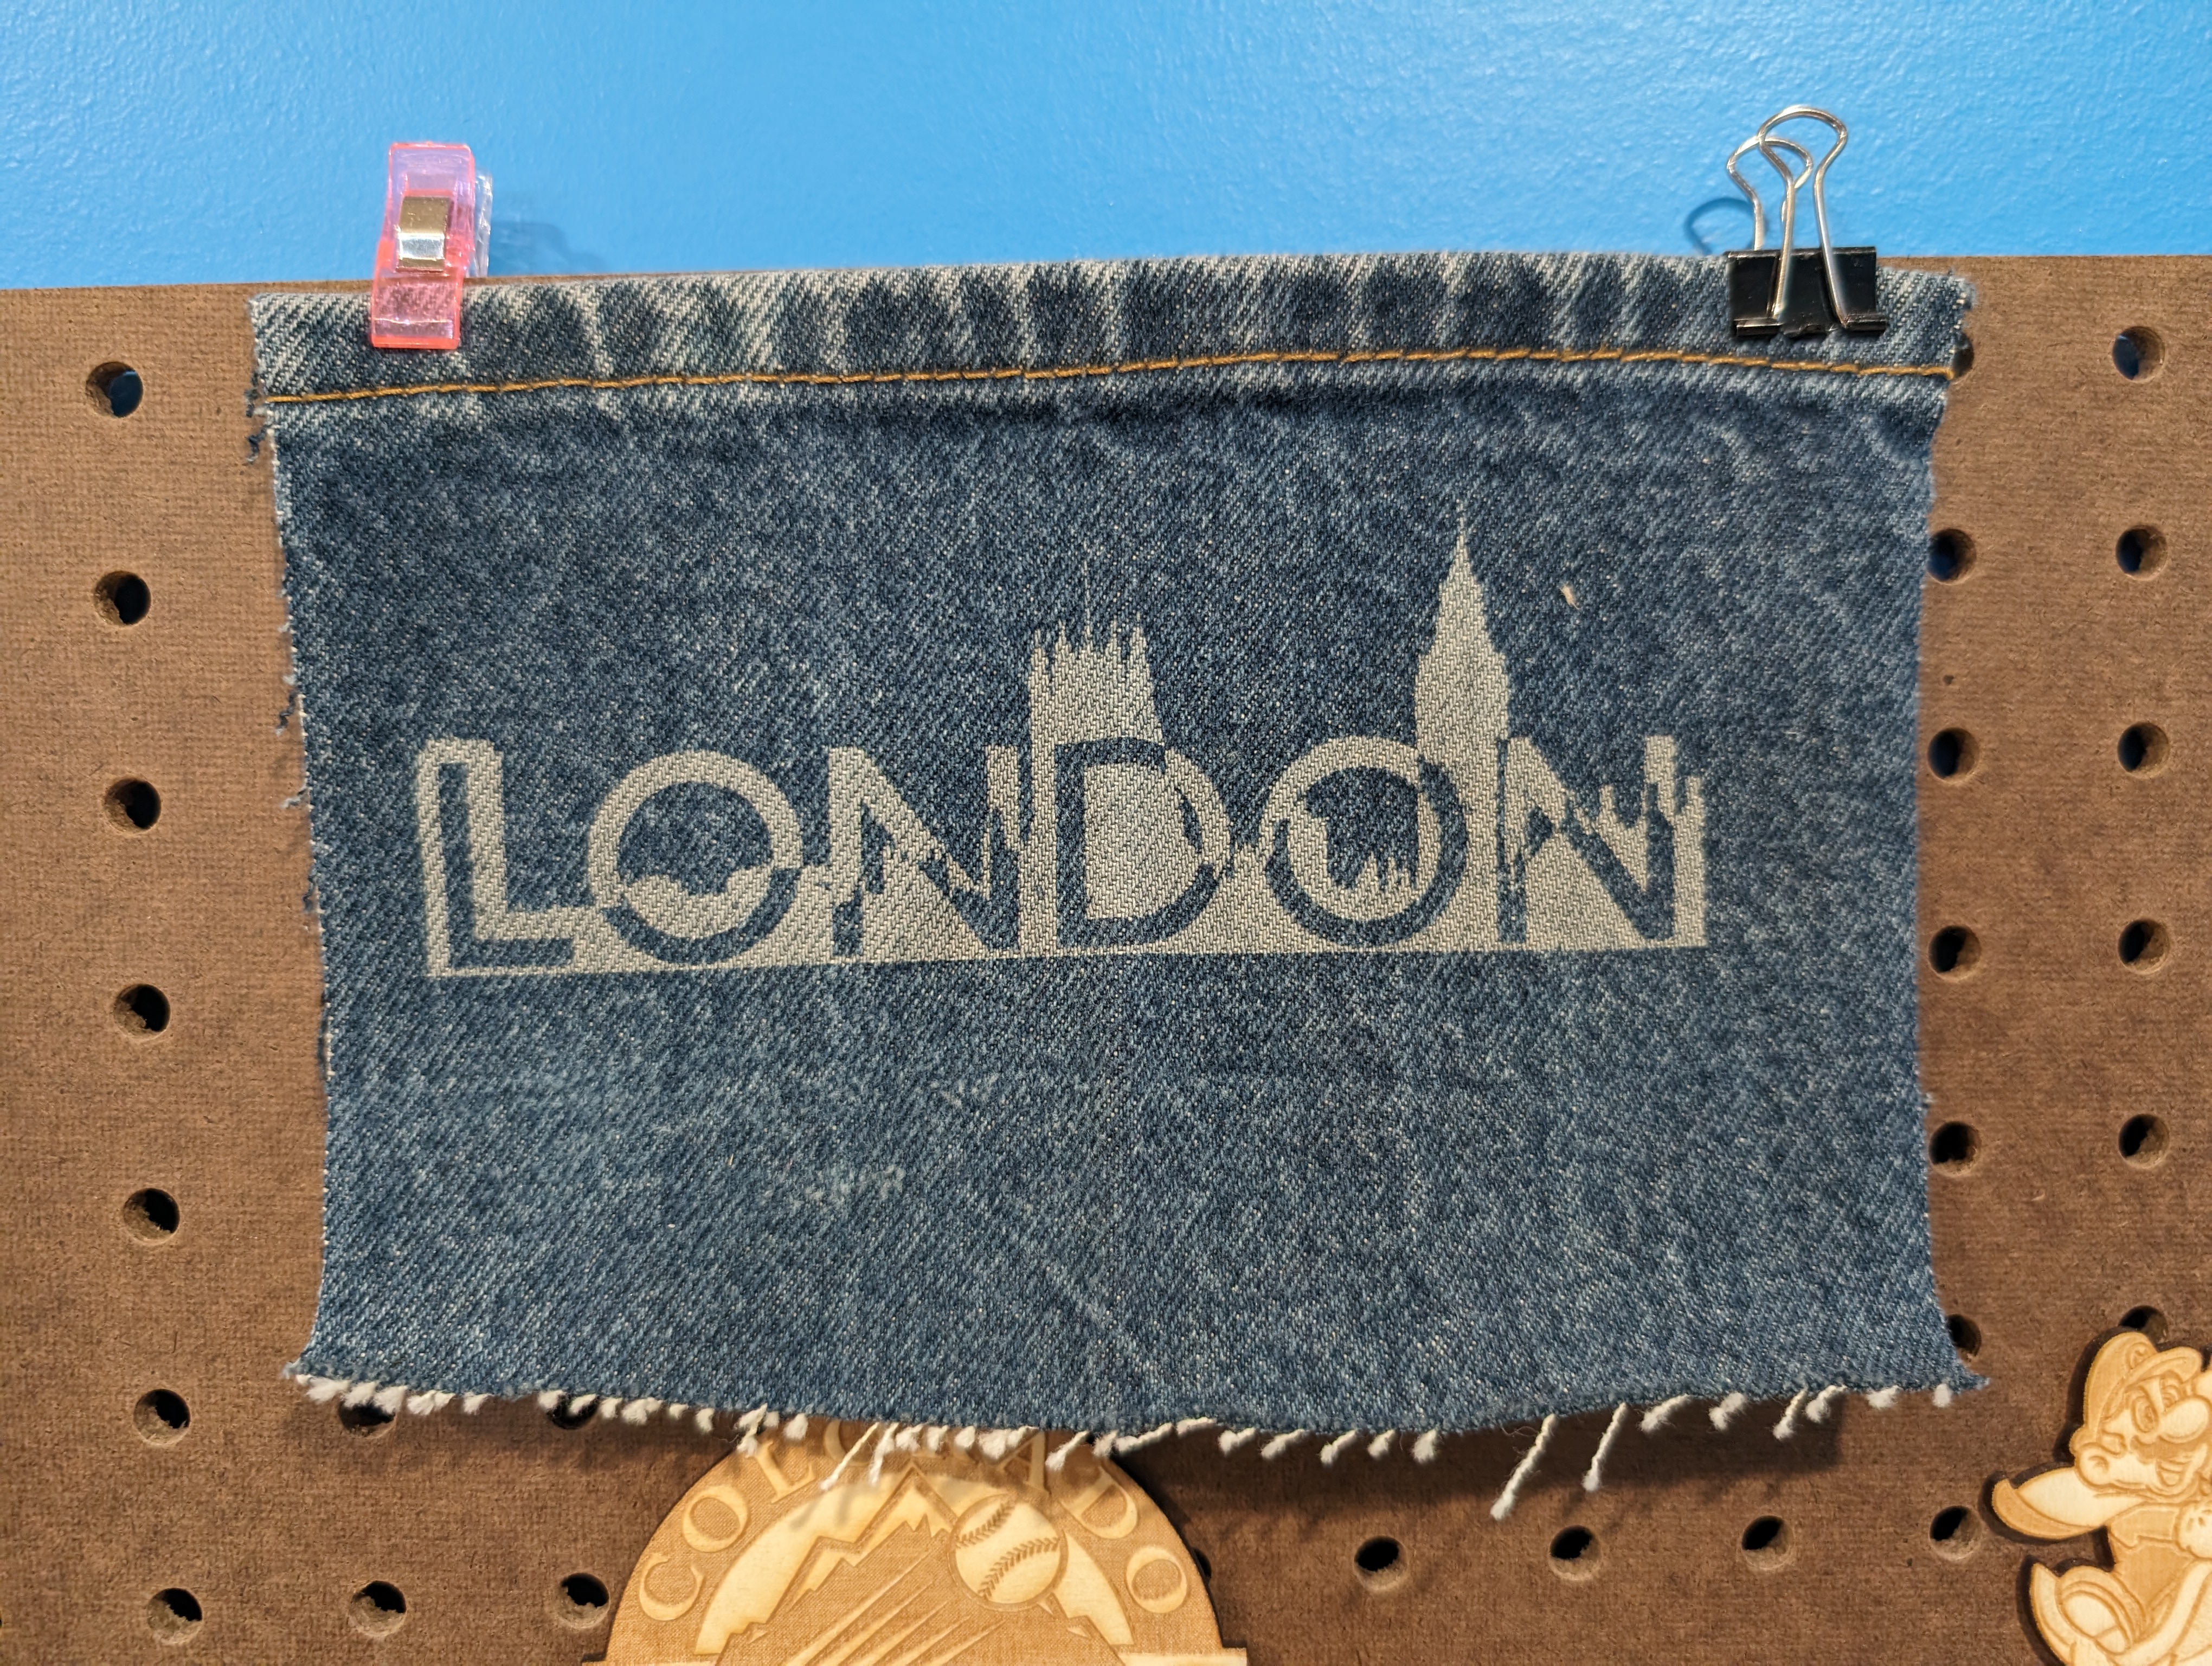 London logo etched on denim